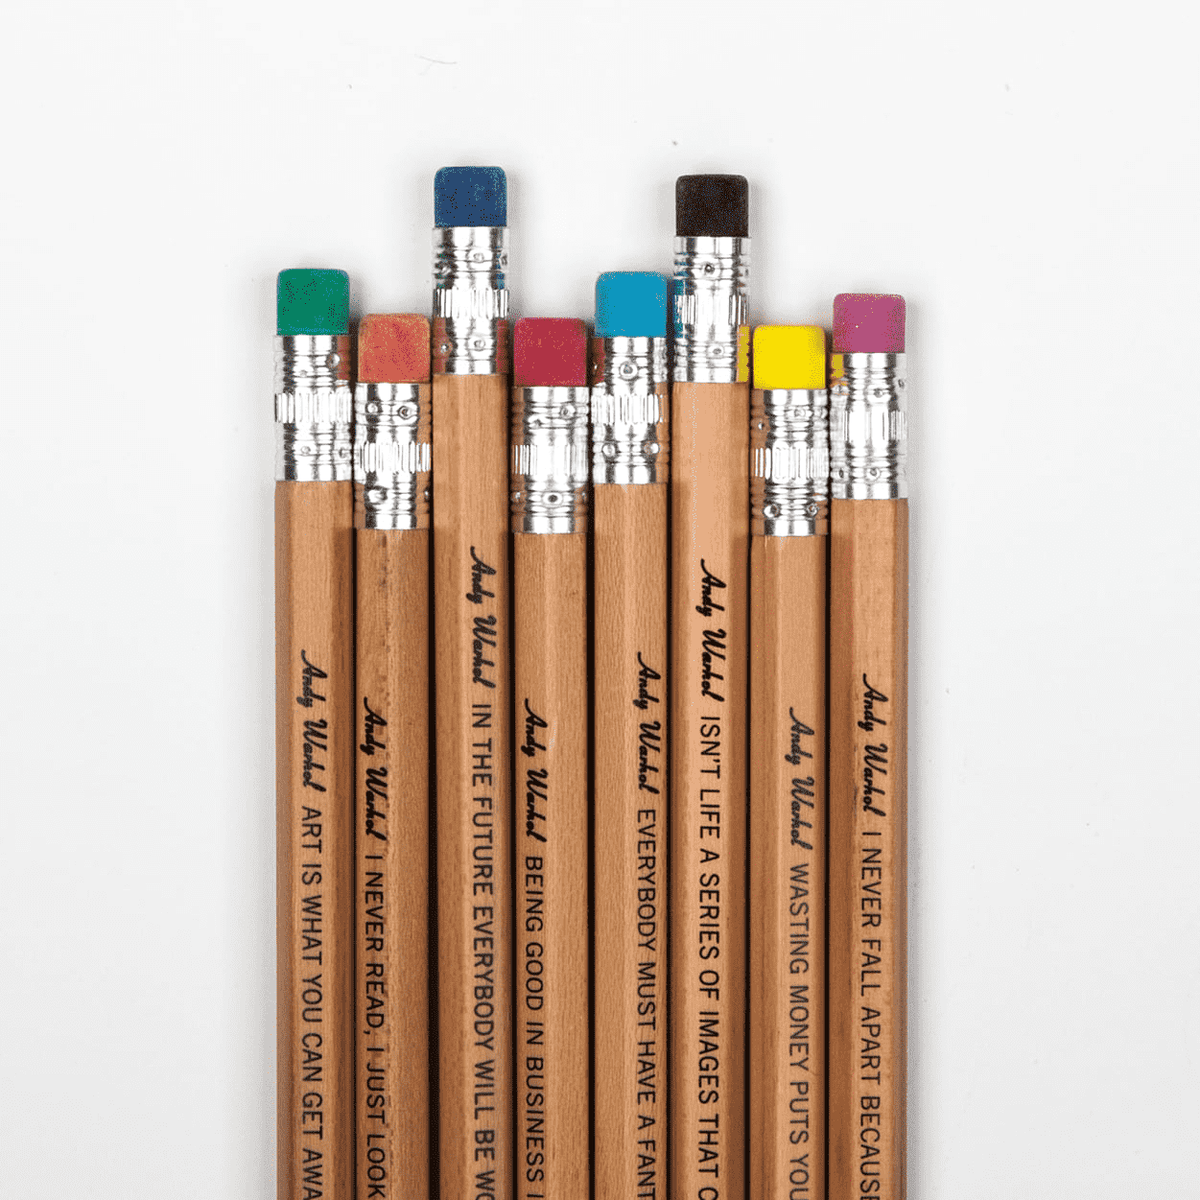 Andy Warhol Philosophy Pencils Pens and Pencils Galison 